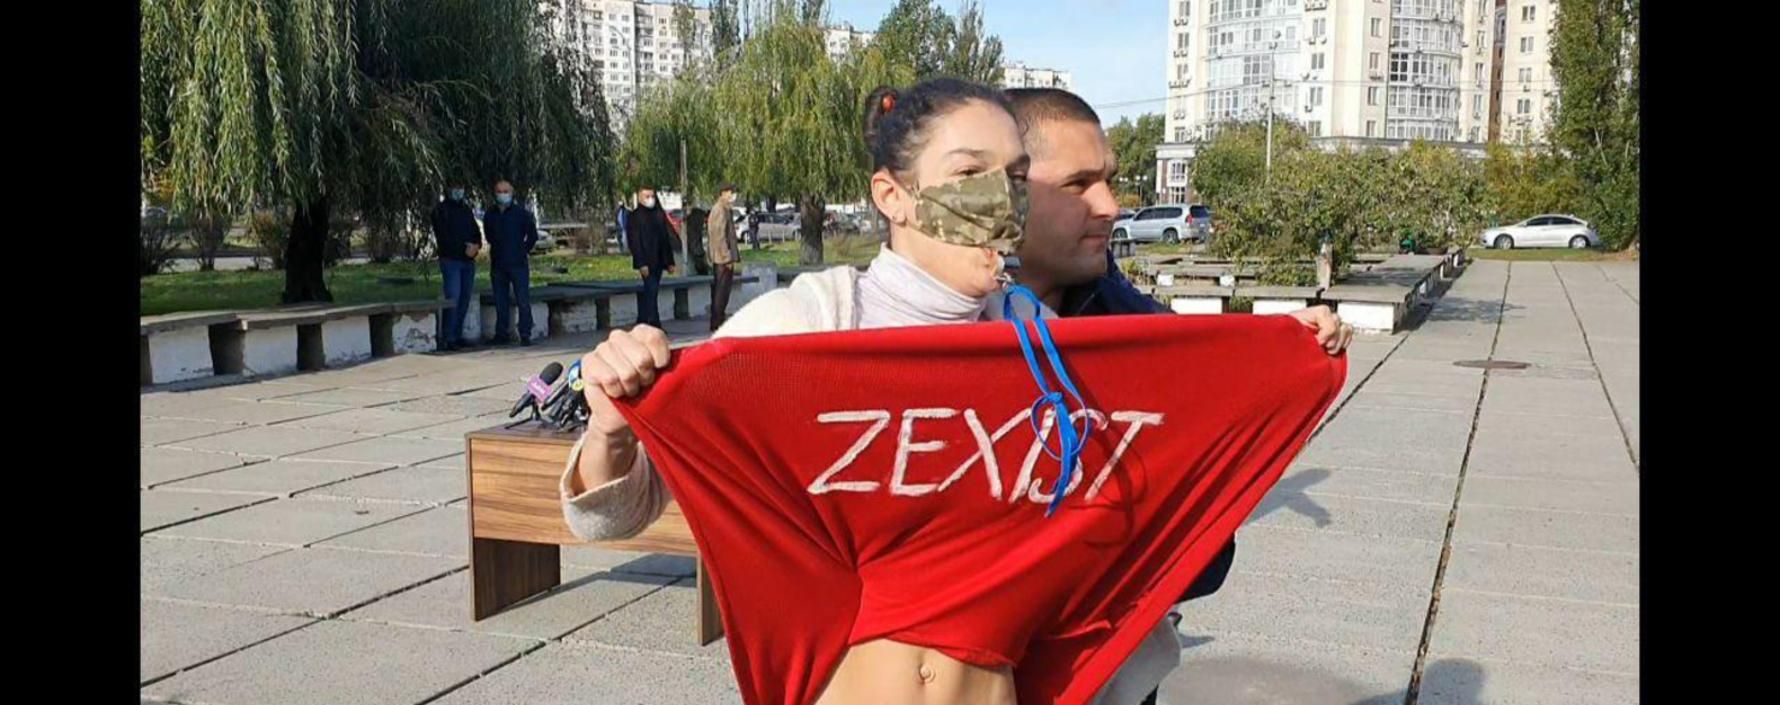 Активистка Femen обнажилась перед Зеленским на участке: фото, видео